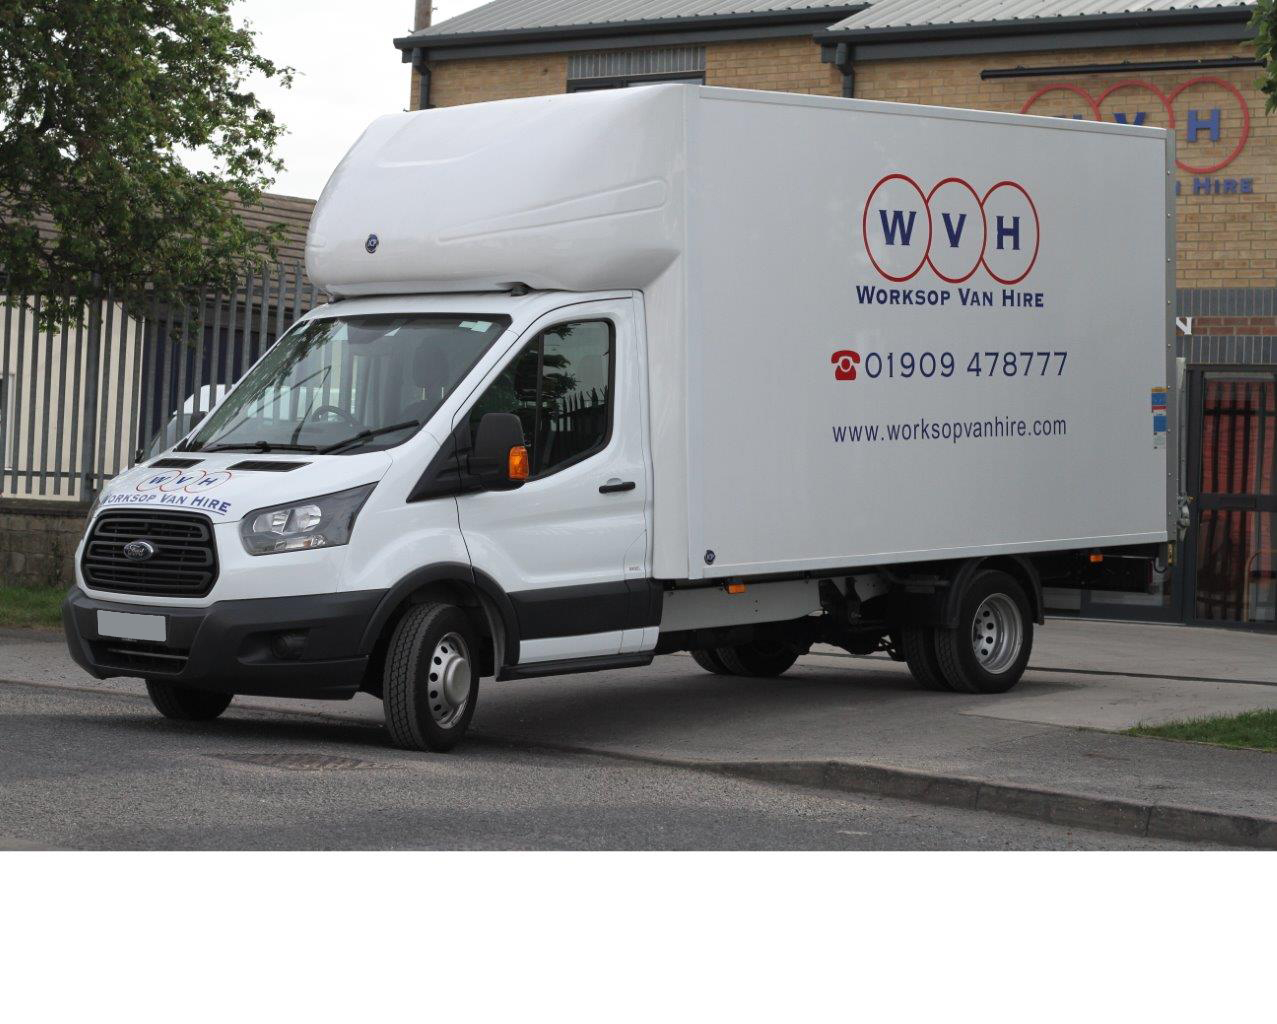 Luton Box Van for hire in Worksop